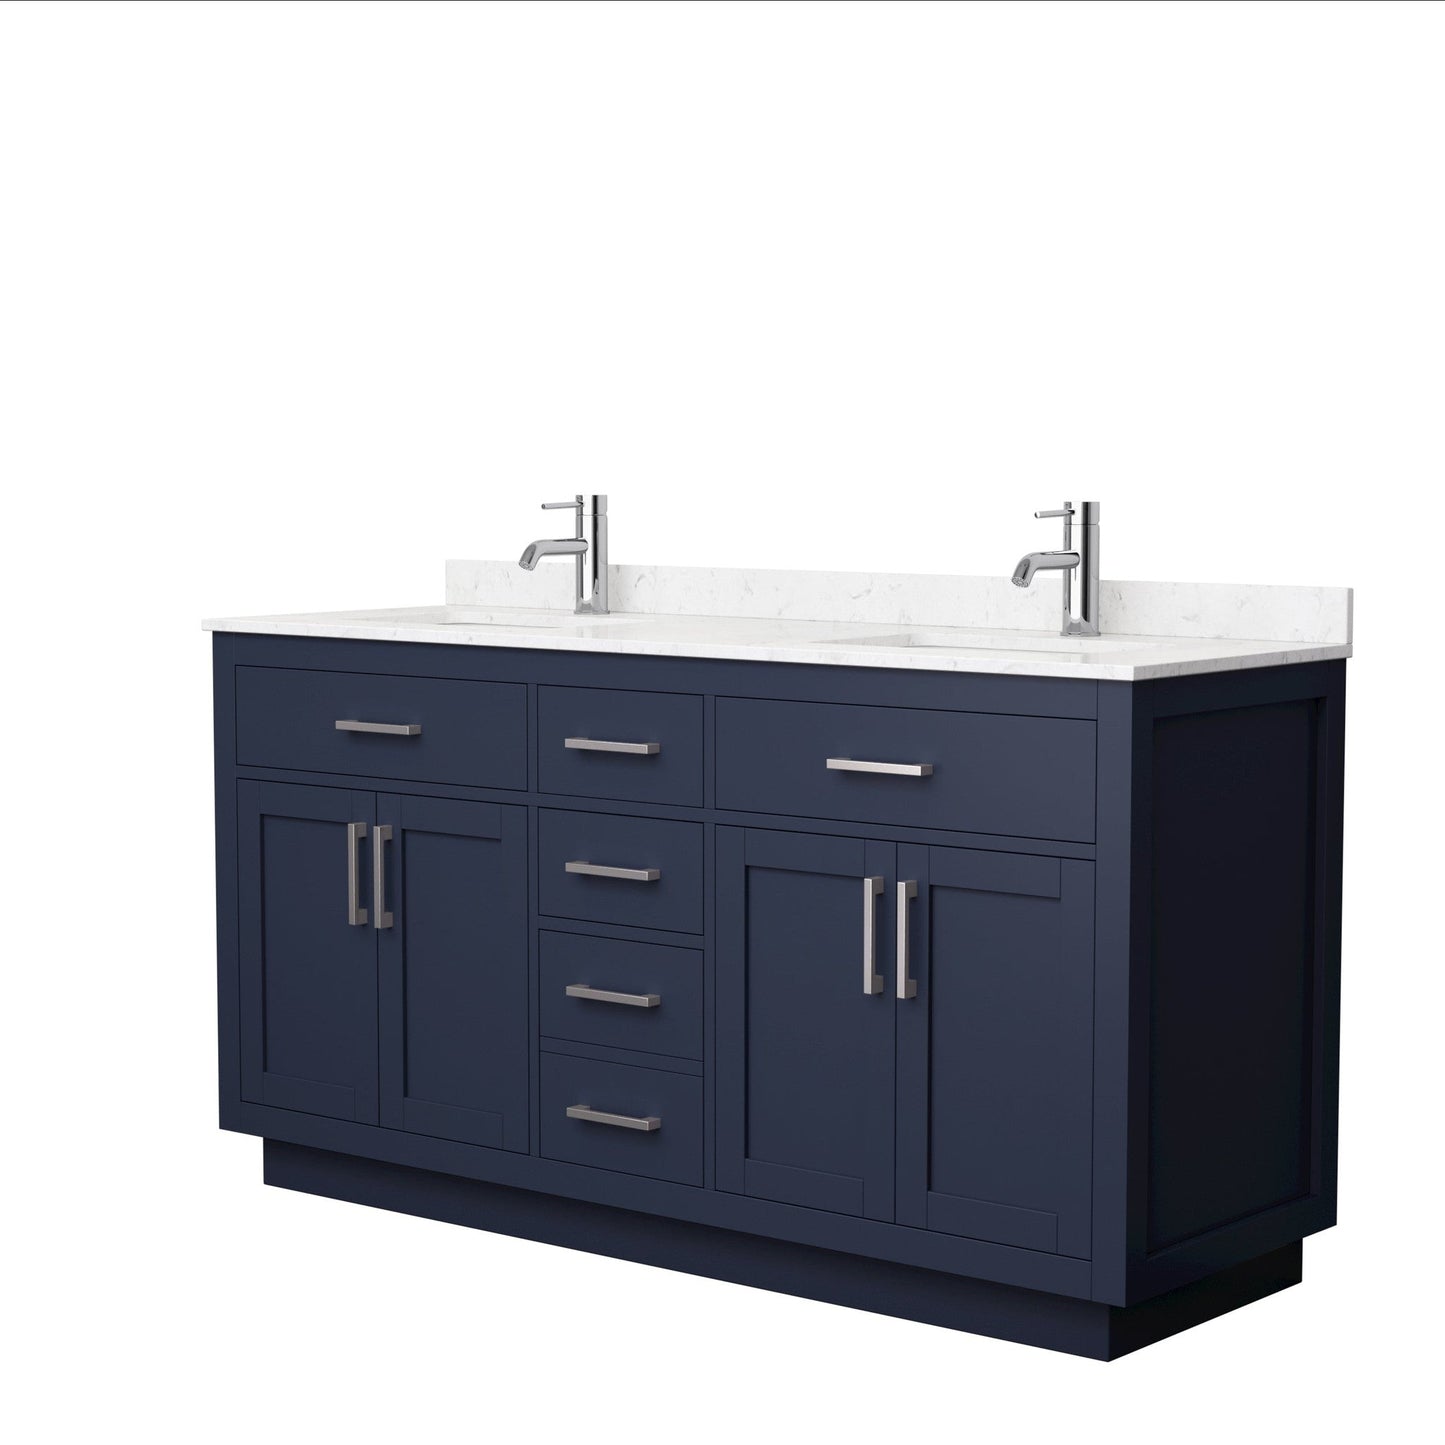 Beckett 66" Double Bathroom Vanity With Toe Kick in Dark Blue, Carrara Cultured Marble Countertop, Undermount Square Sinks, Brushed Nickel Trim